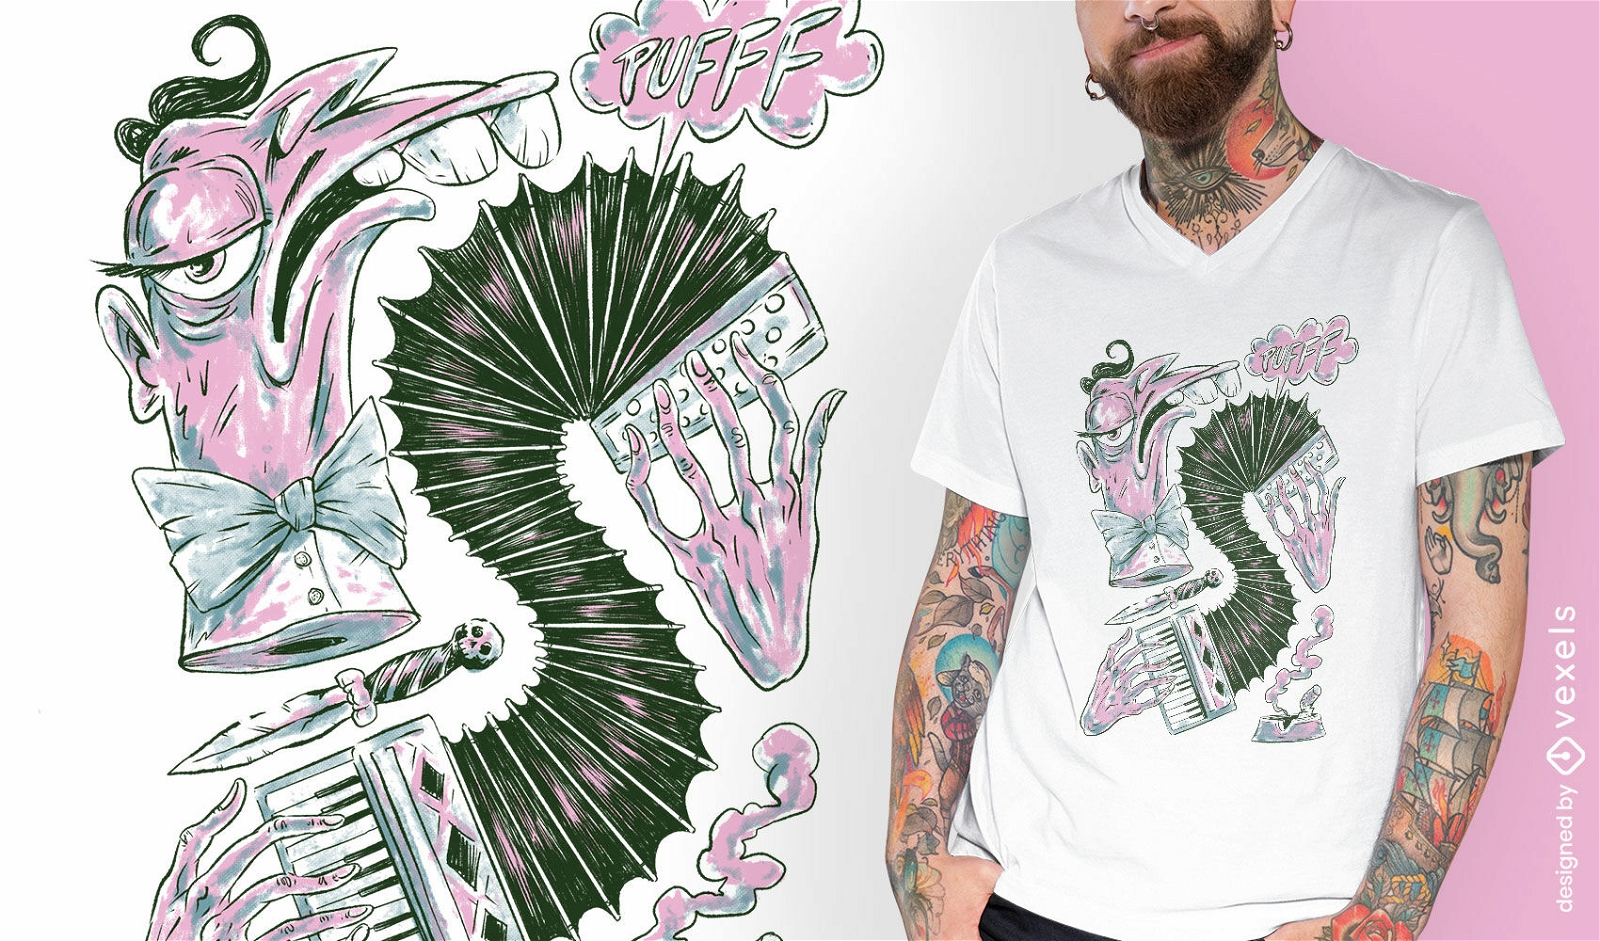 Accordion player cartoon musician t-shirt design